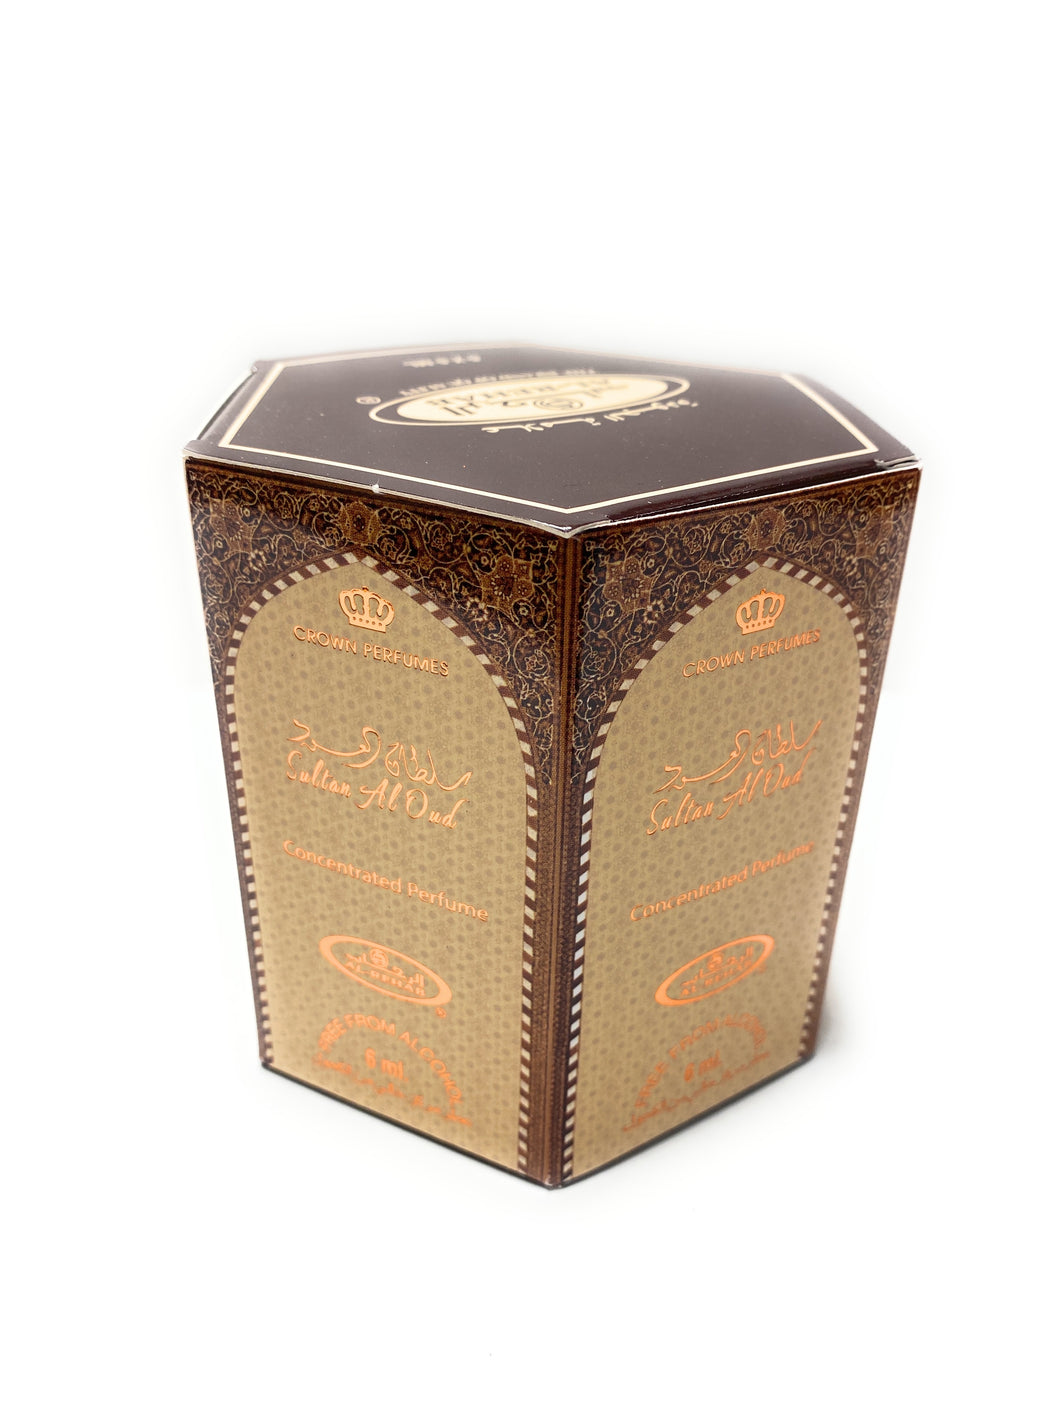 Golden Sand - 3ml OR 6ml OR 12ml - Alcohol Free Arabic Perfume Oil  Fragrance for Men and Women (Unisex)